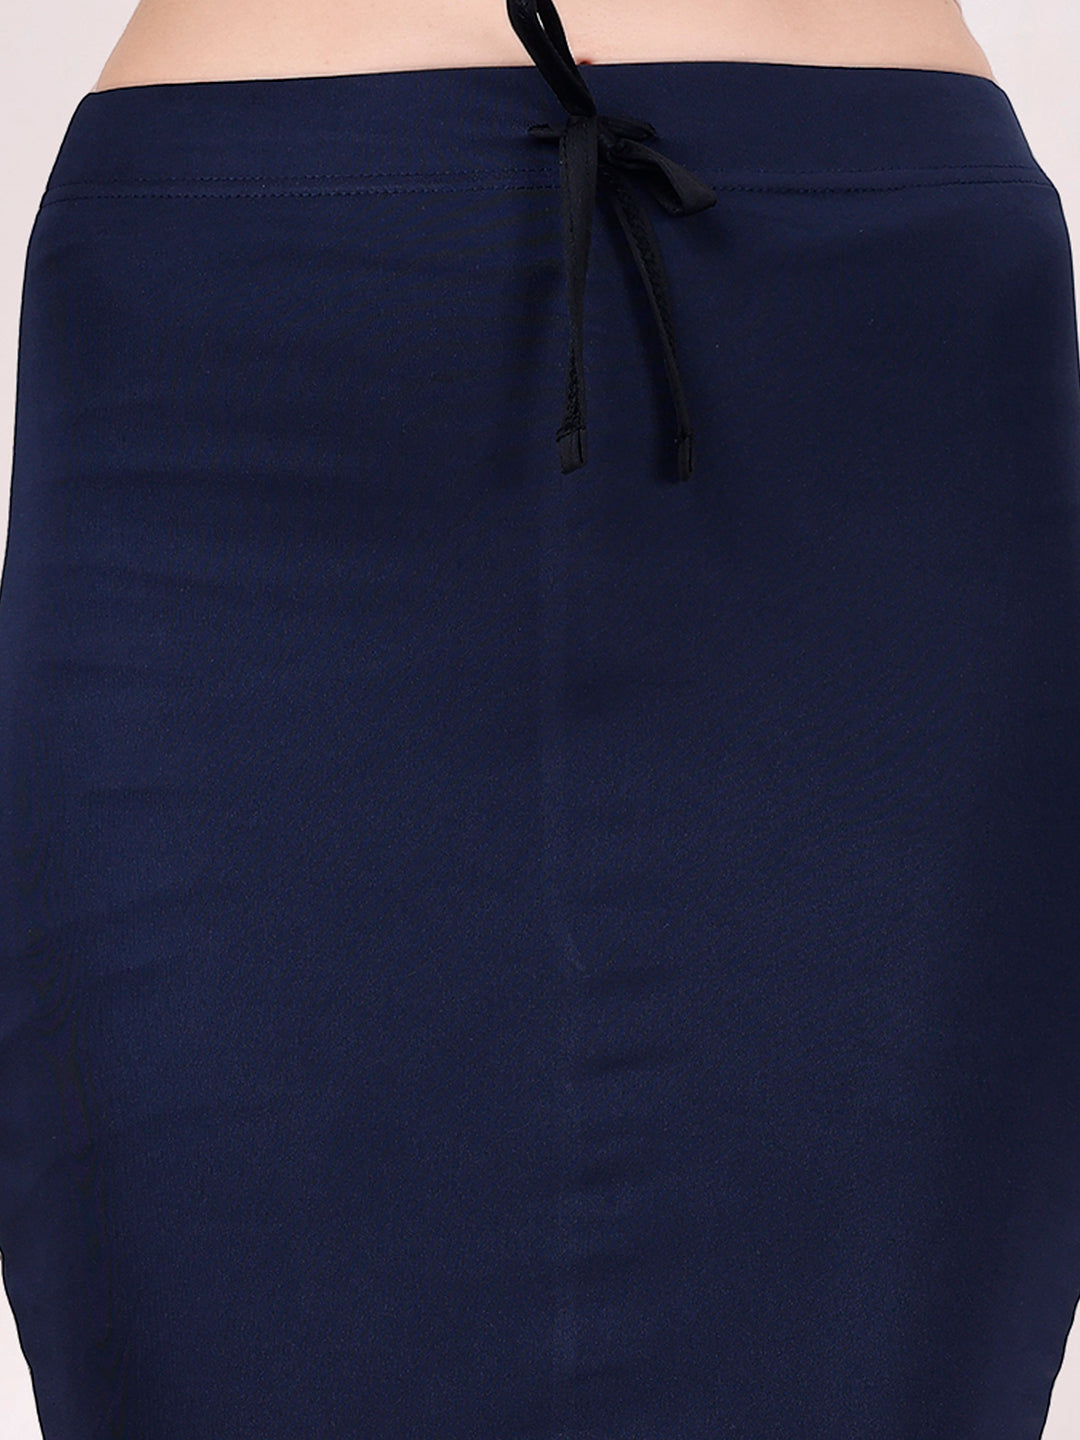 Navy-blue Lycra Shapewear Saree Petticoat